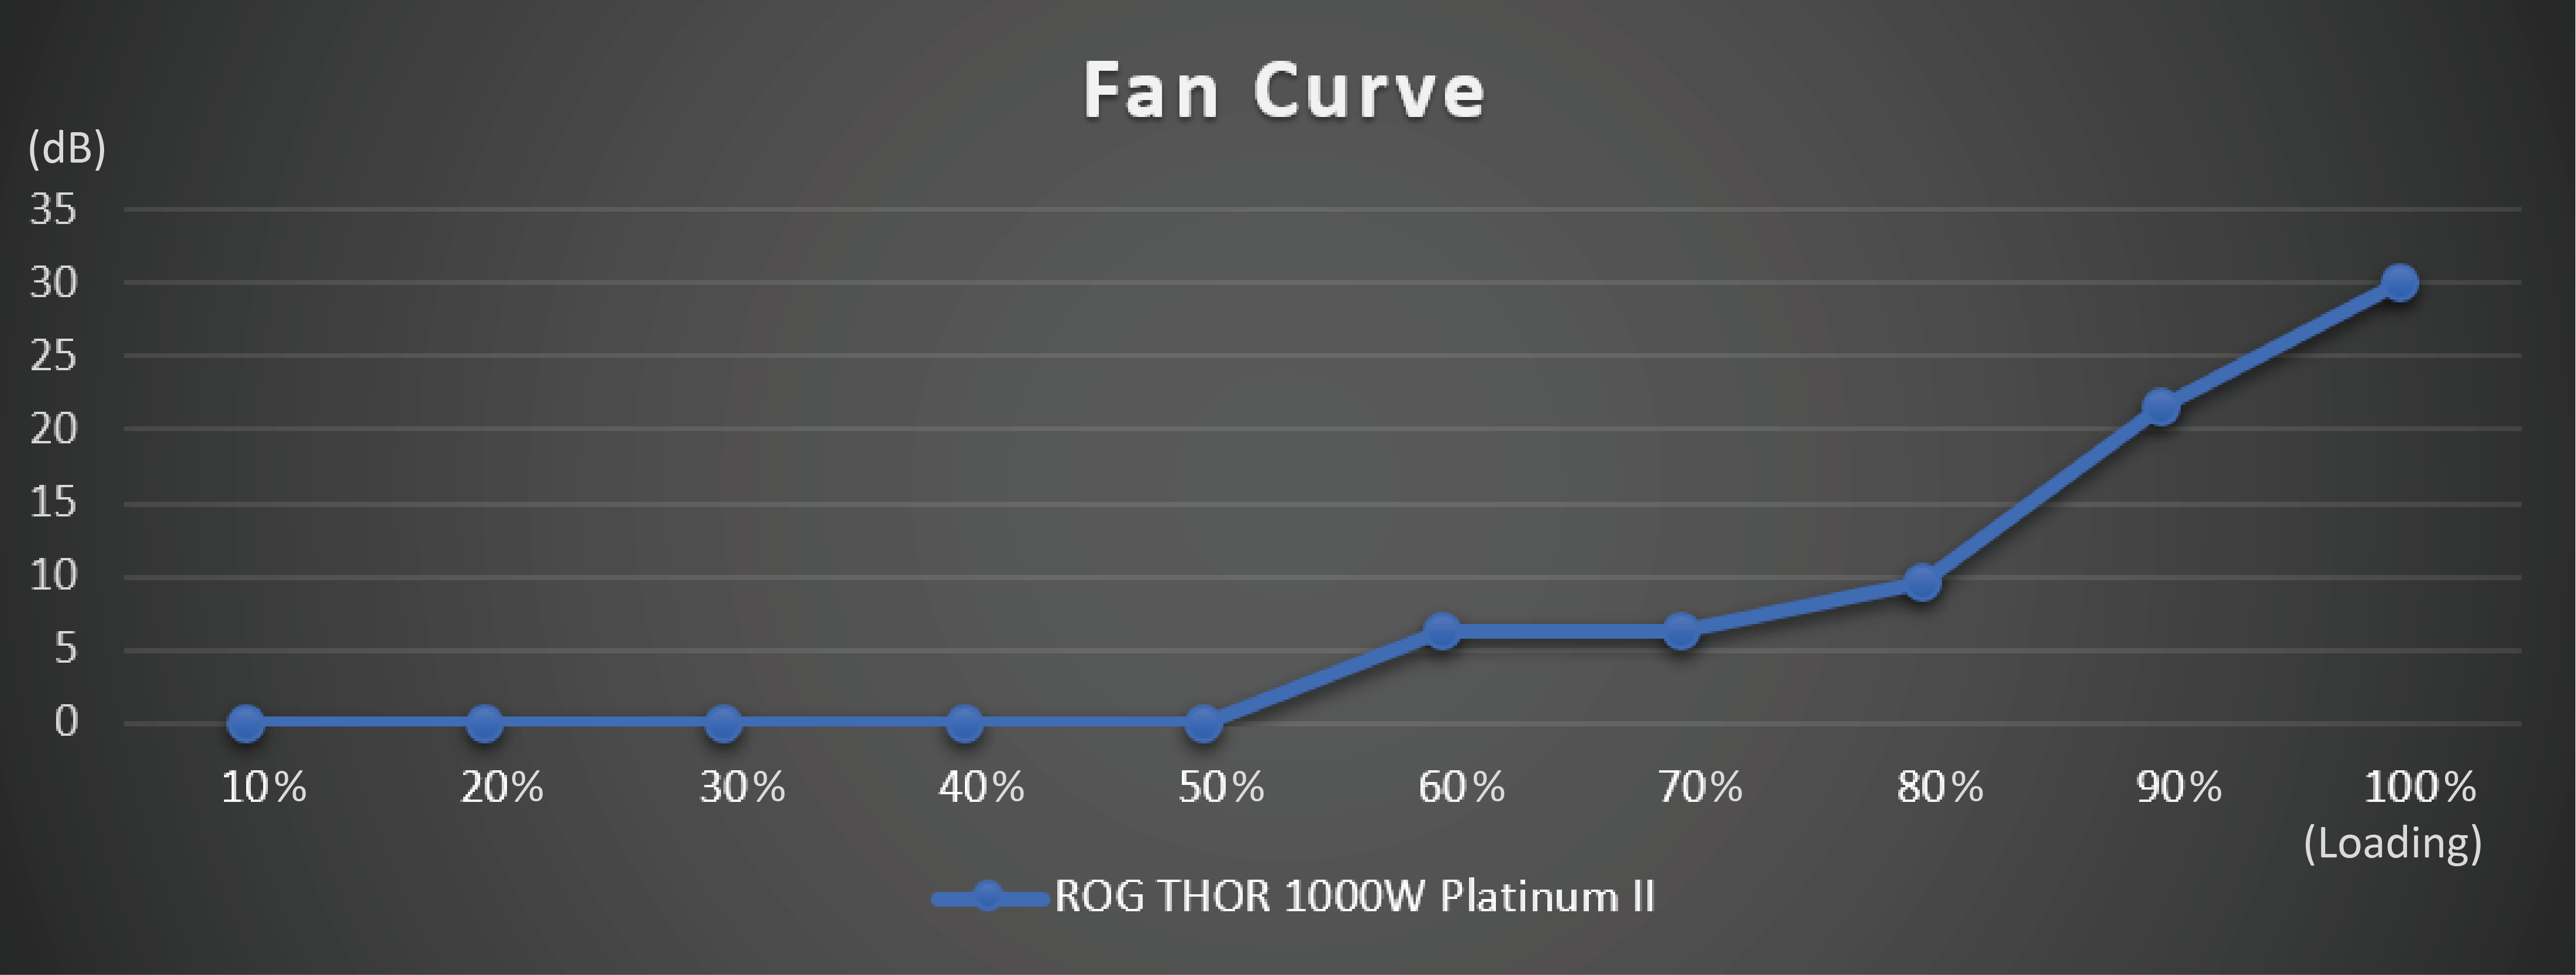 Chart showing fan curve improvement versus original ROG Thor 1200W Platinum